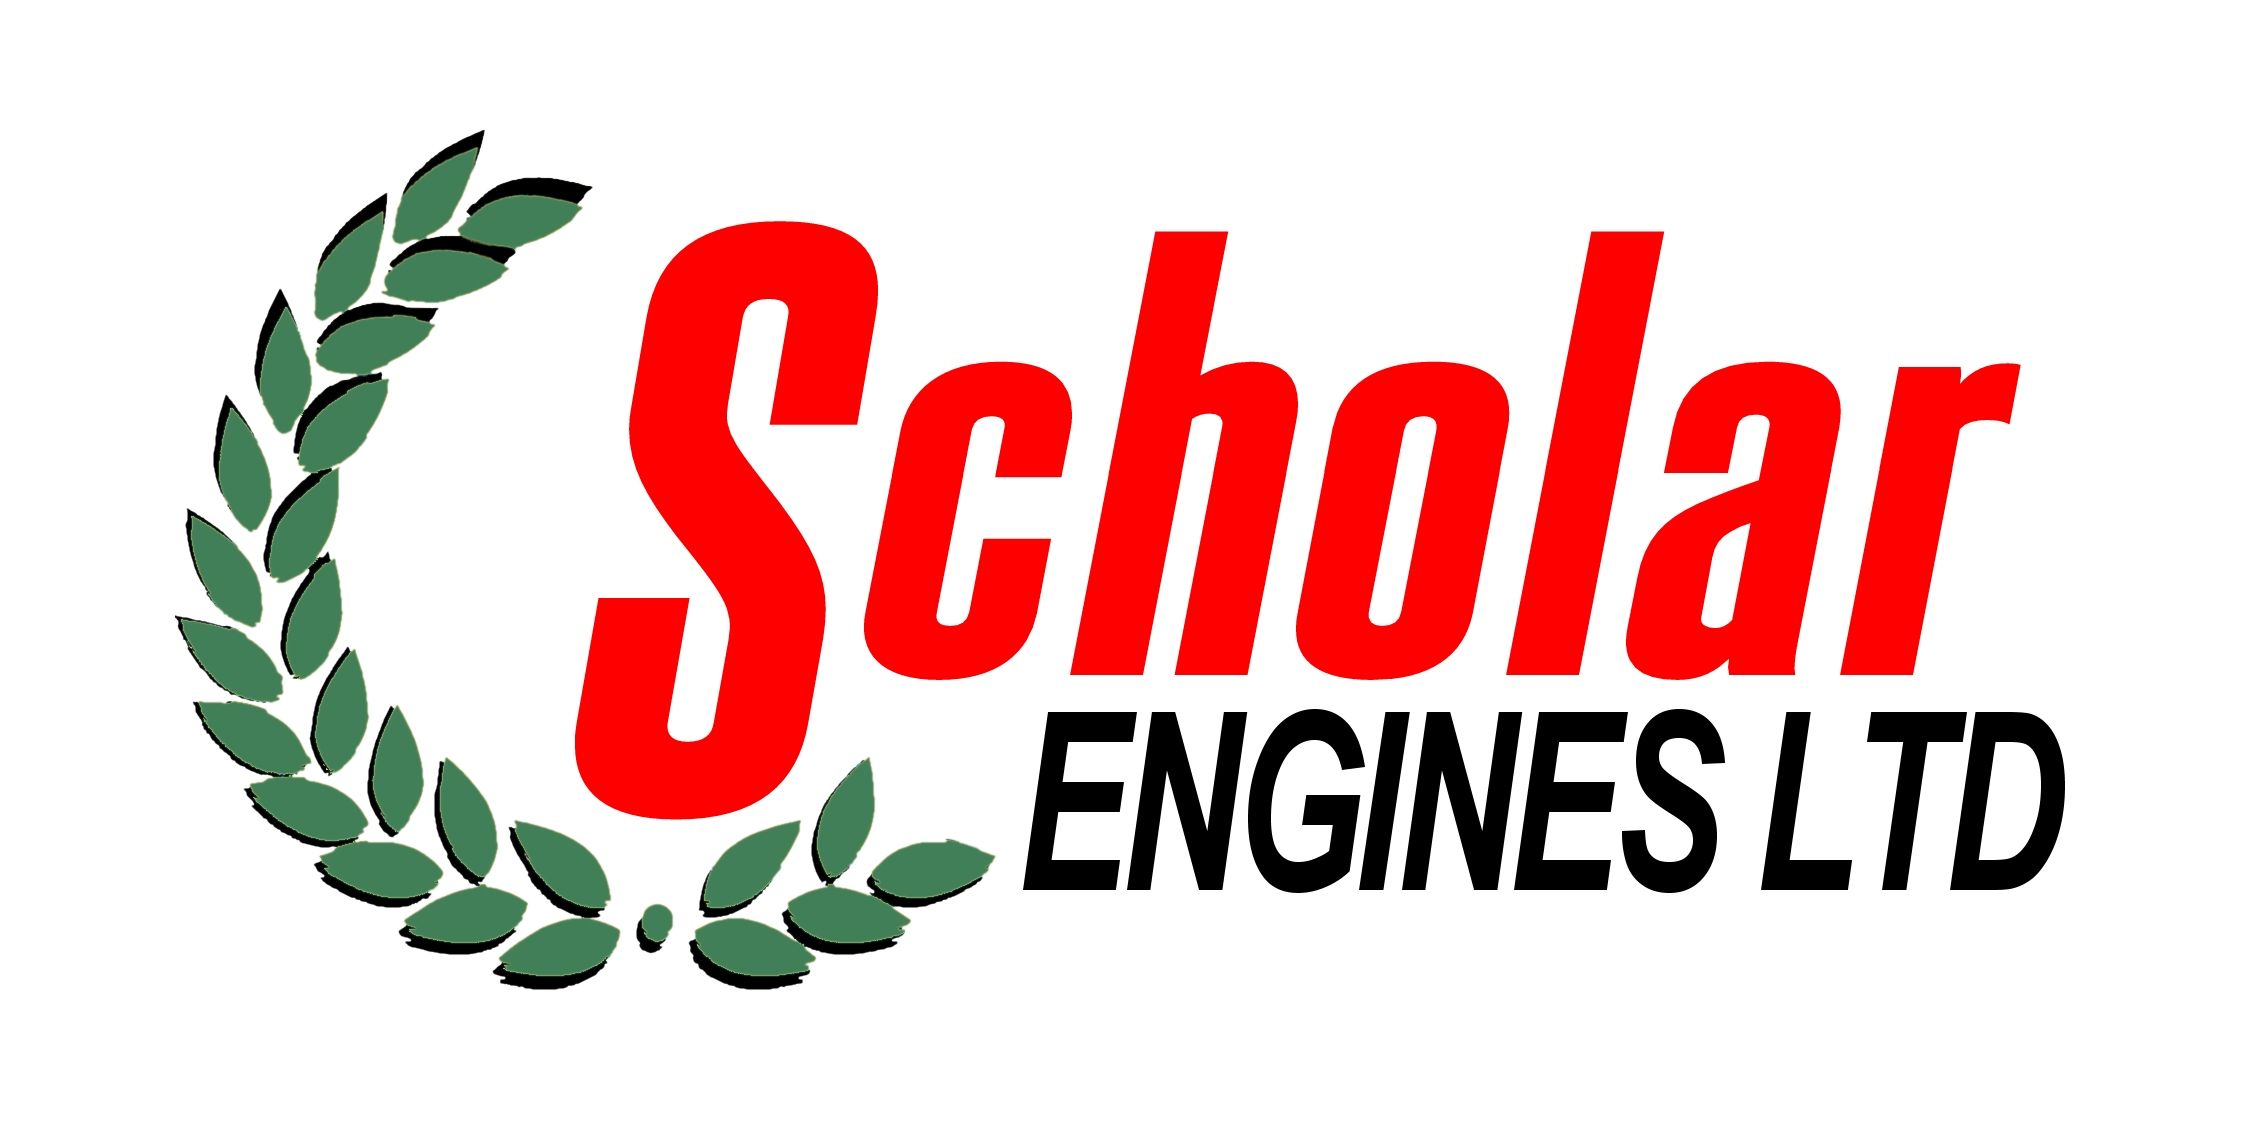 Scholar Engines Ltd